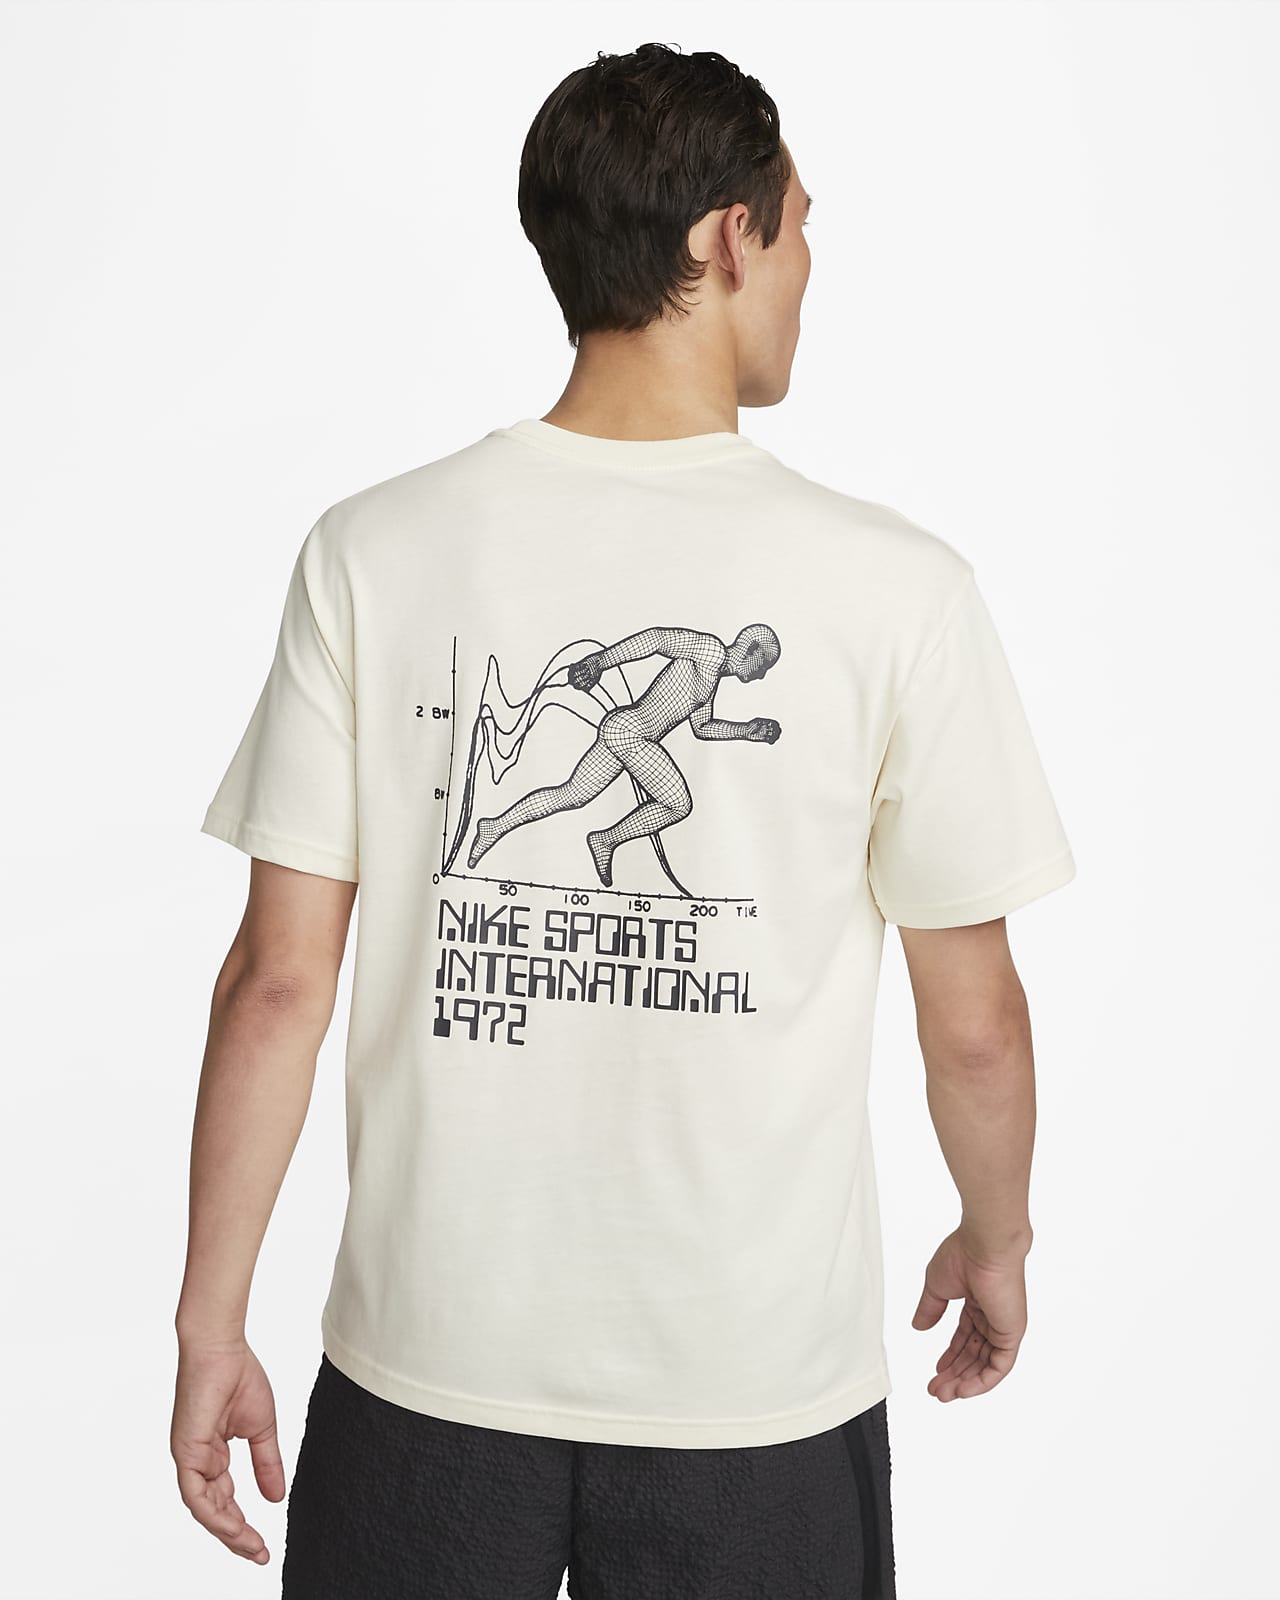 Nike Sportswear Circa Men's Graphic T-Shirt. Nike